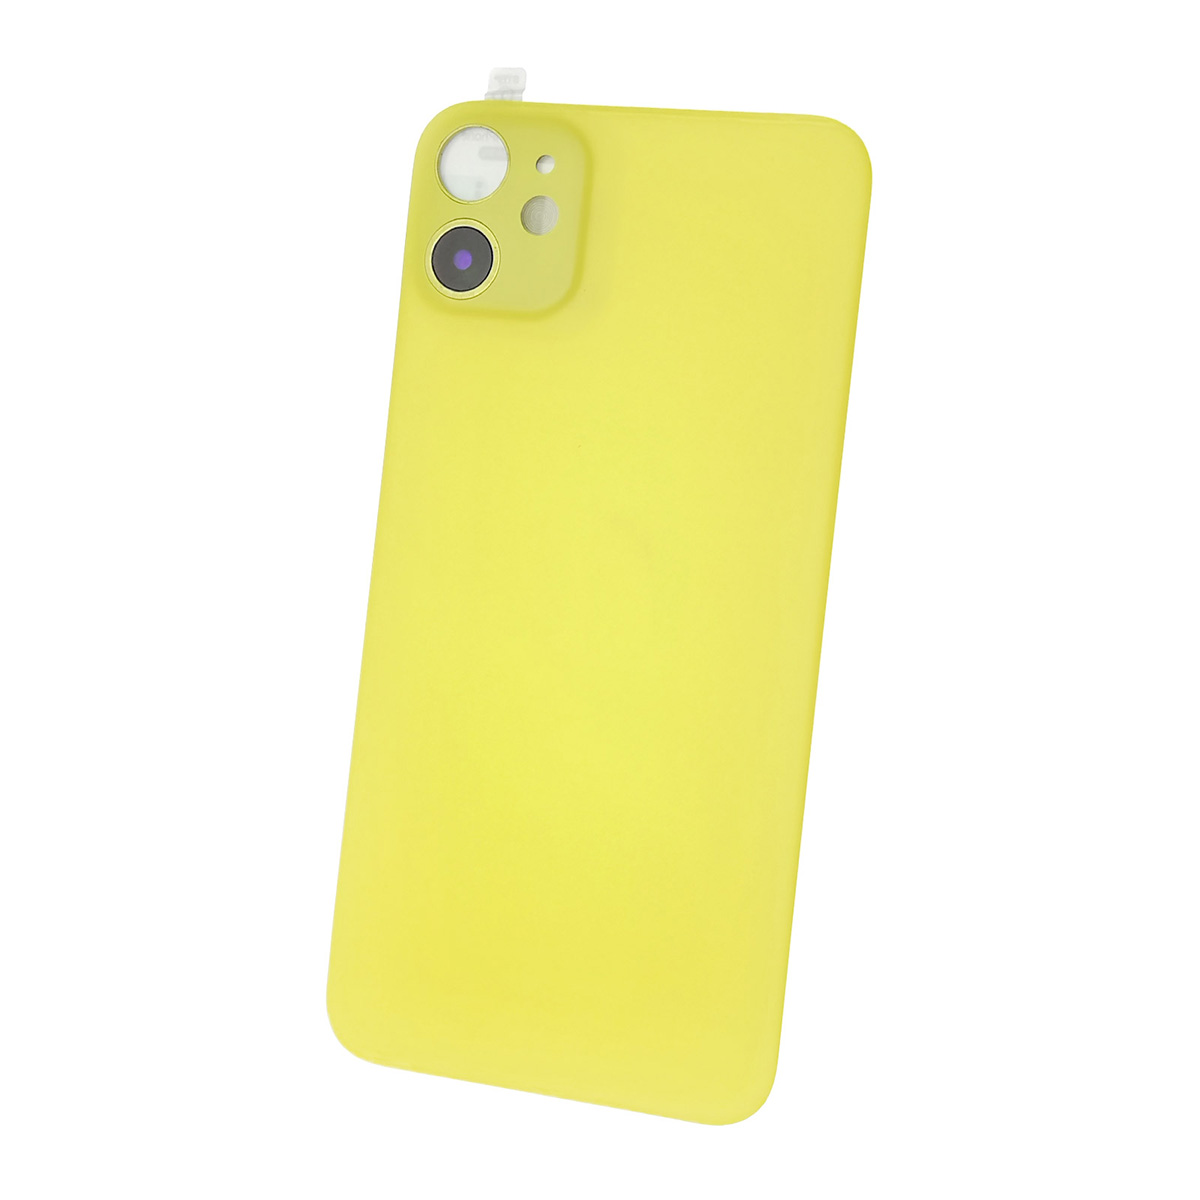 Защитная пленка на заднюю камеру для APPLE iPhone XR обманка на Apple iPhone 11, цвет золотистый.